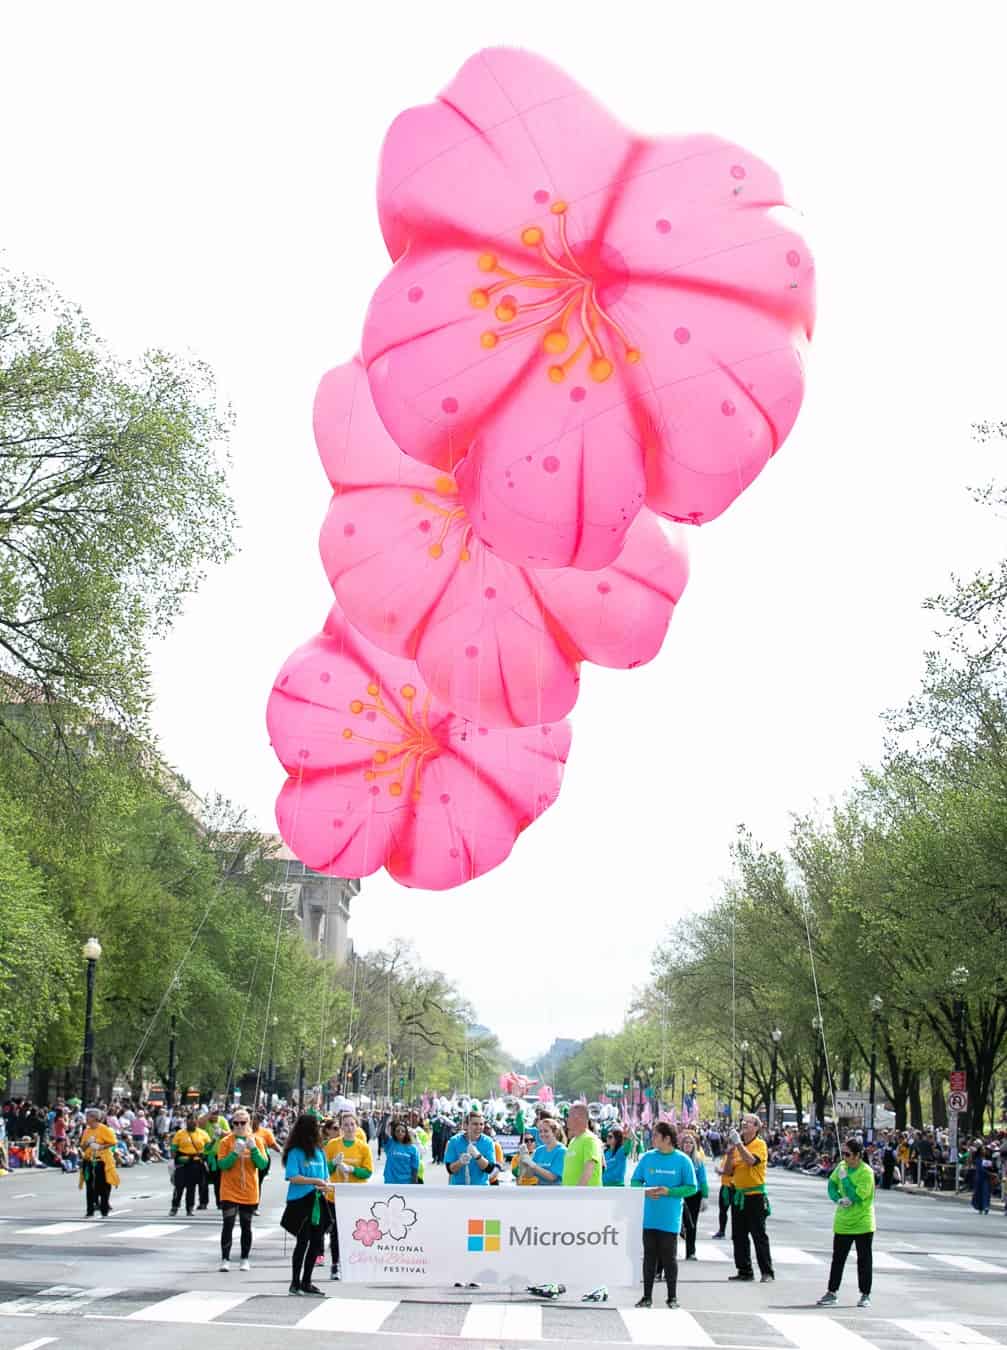 Cherry Blossom kites being flown at National Cherry Blossom Festival Parade